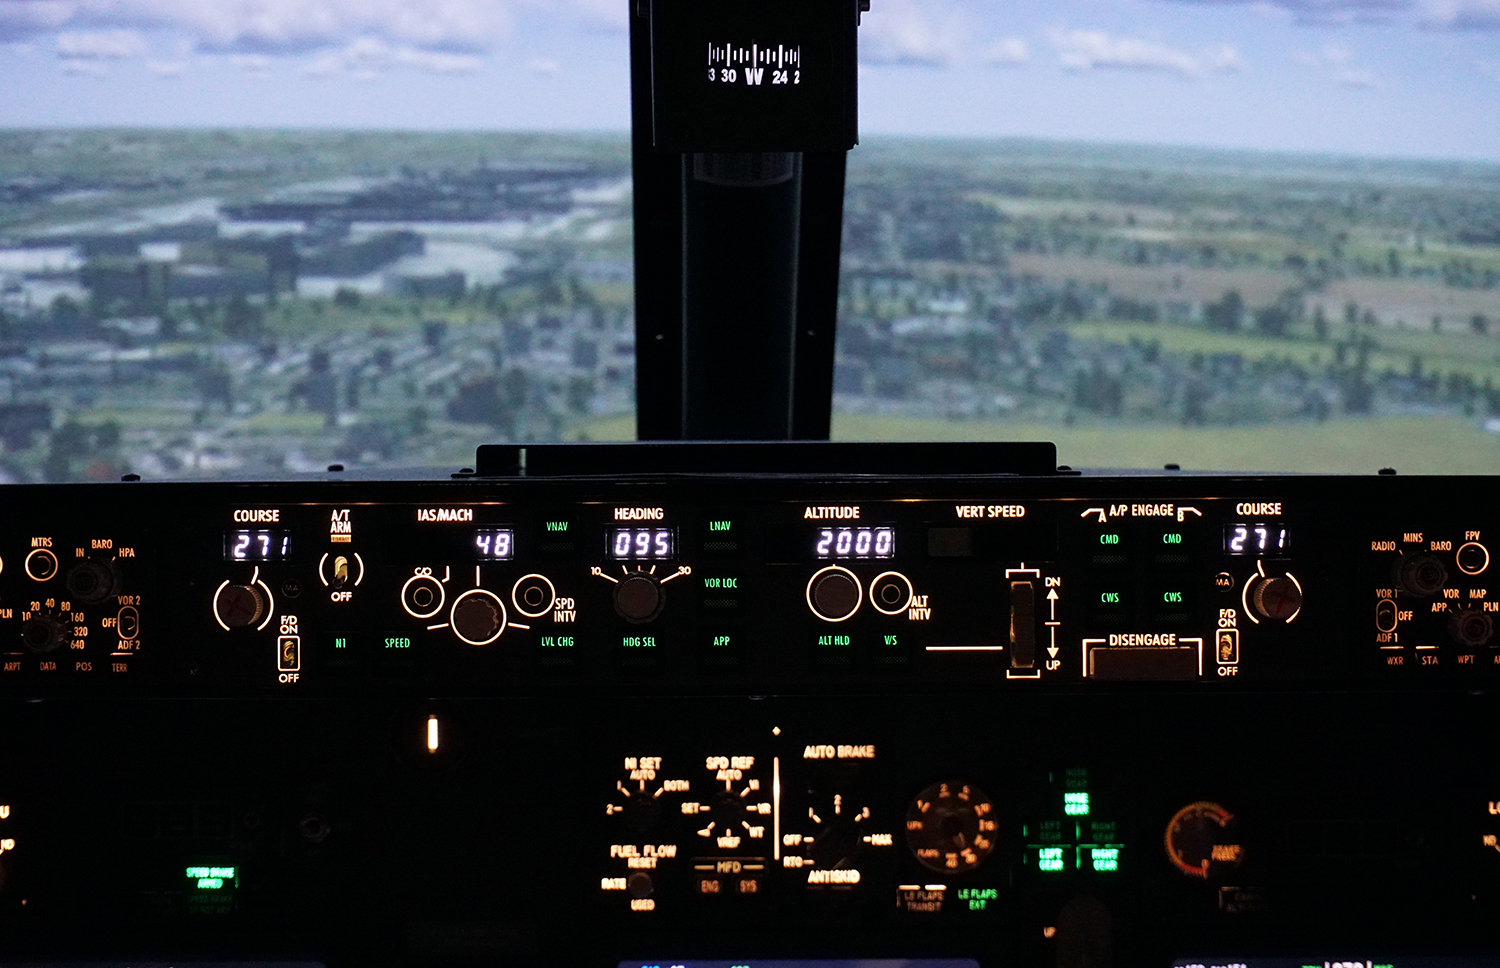 Flight simulator over London